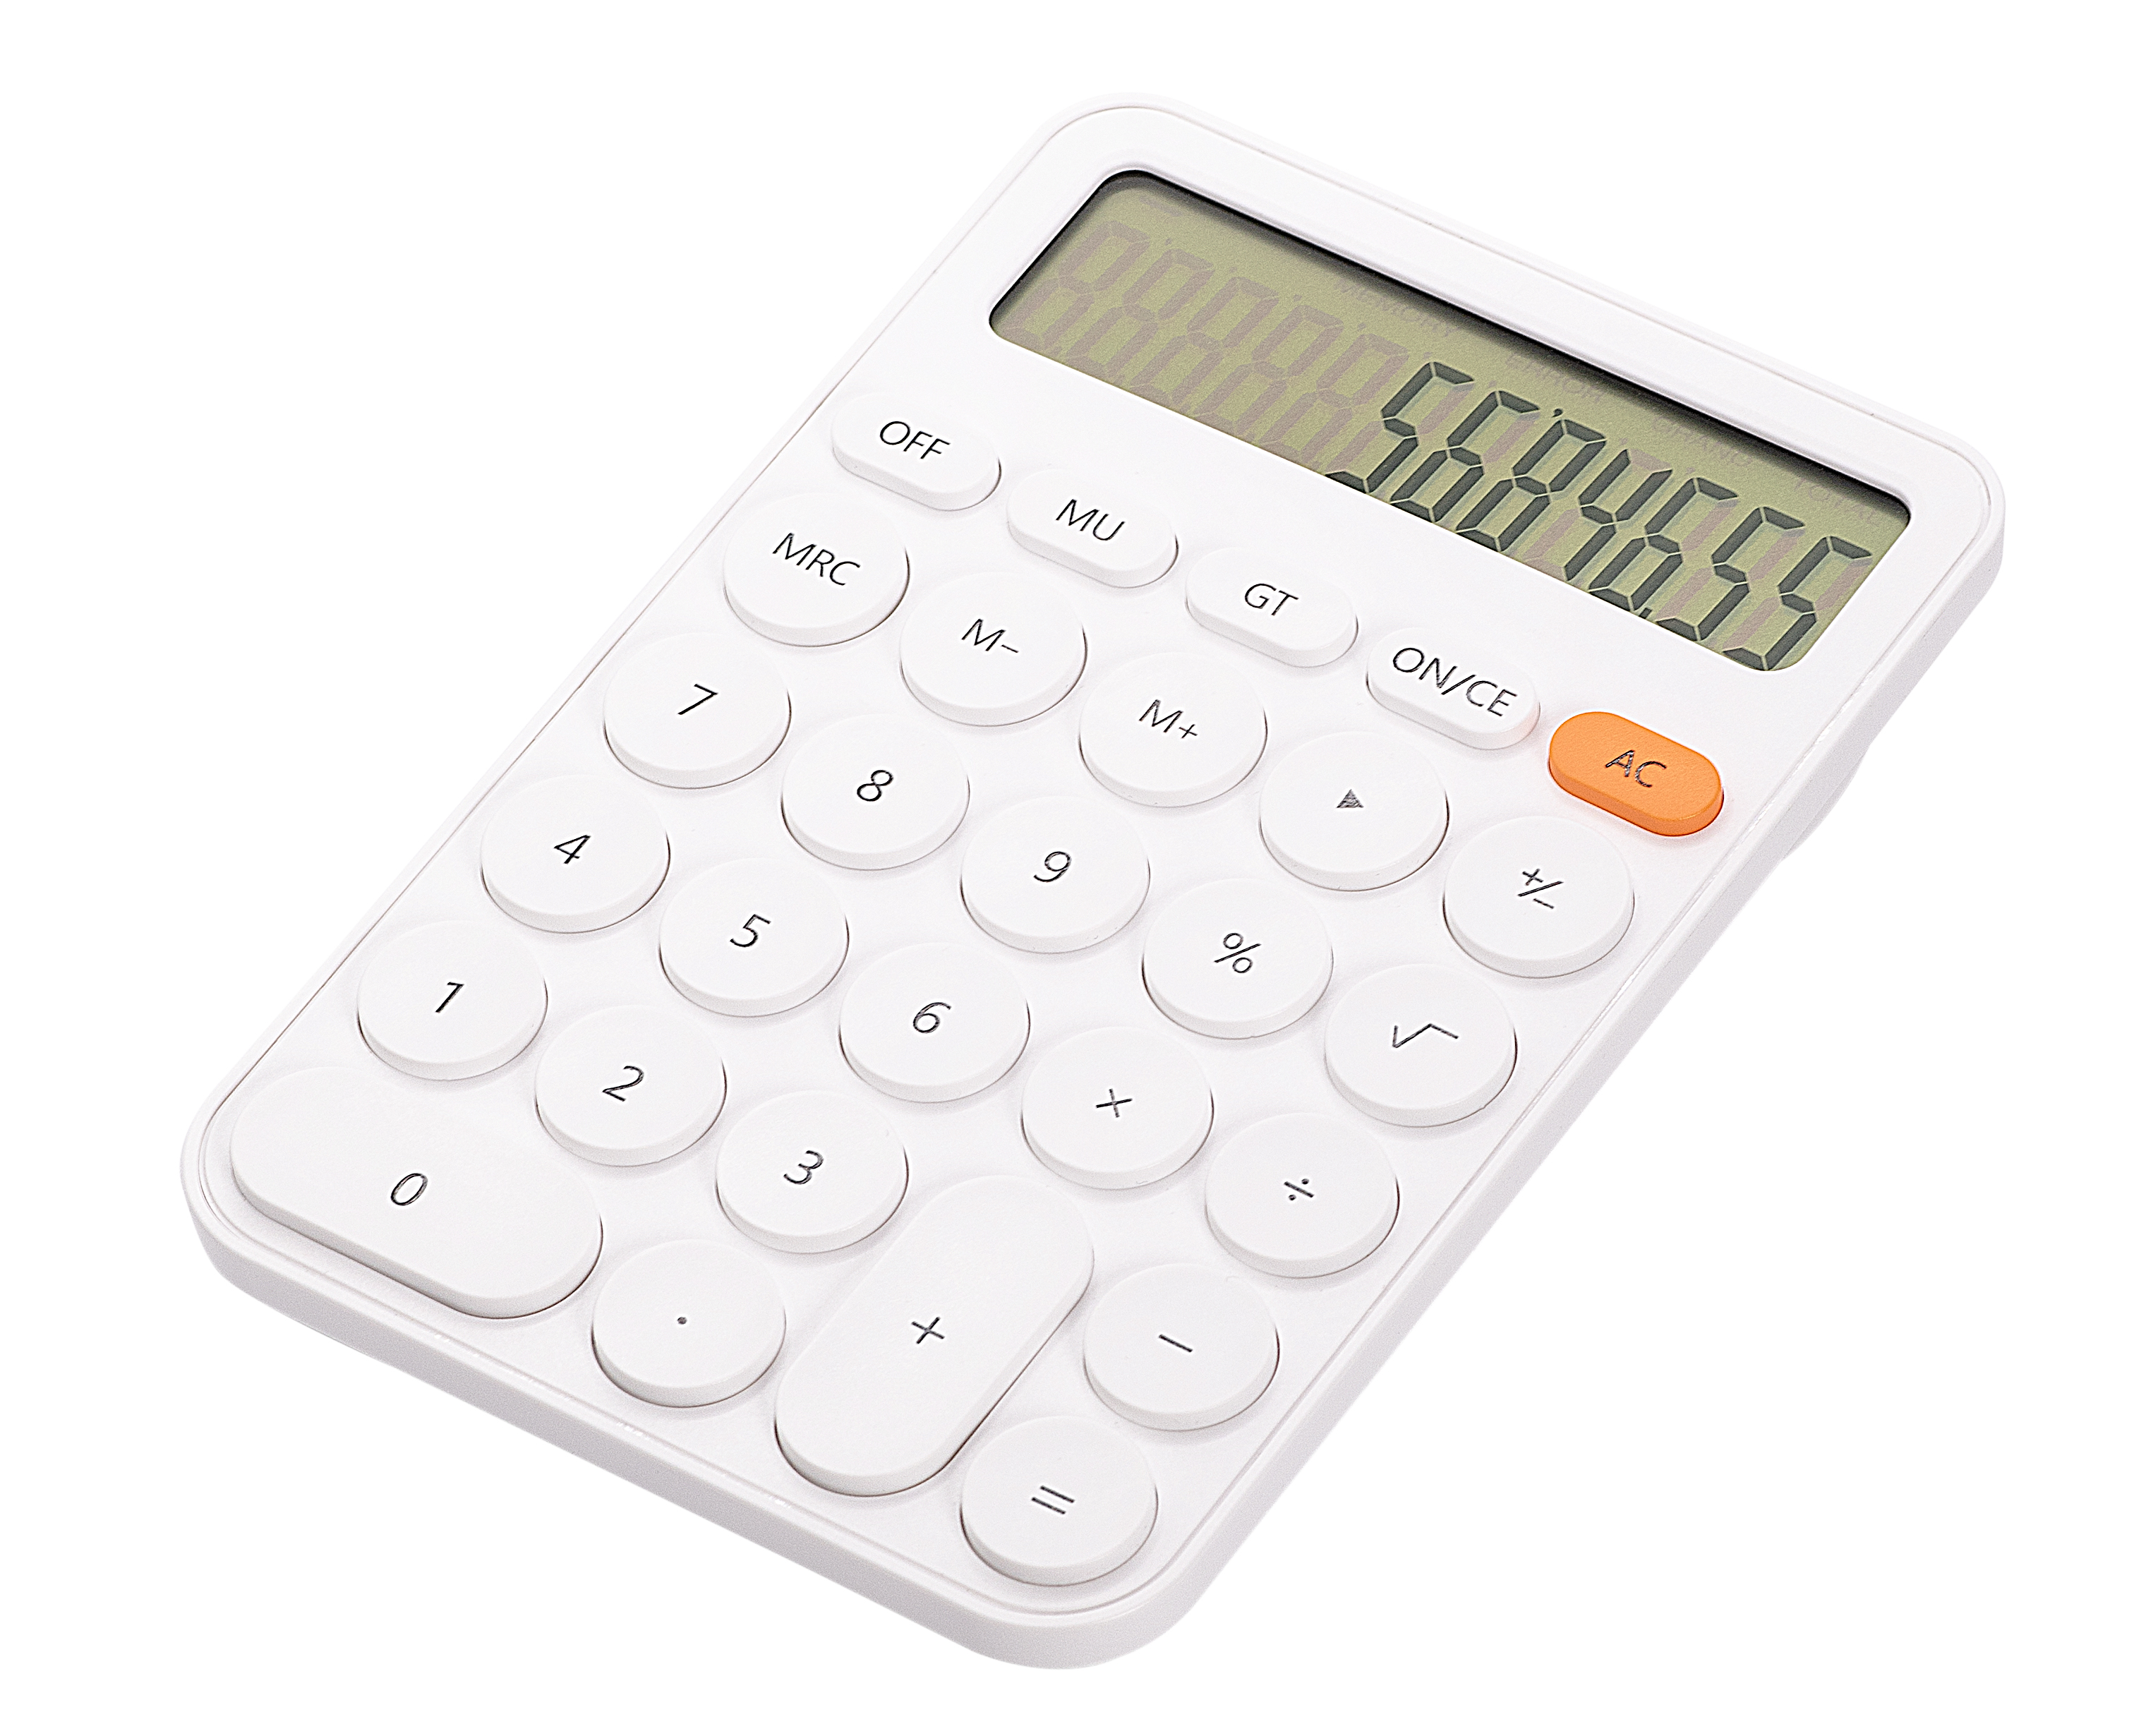 TIMELESS Finally a beautiful desktop calculator again!